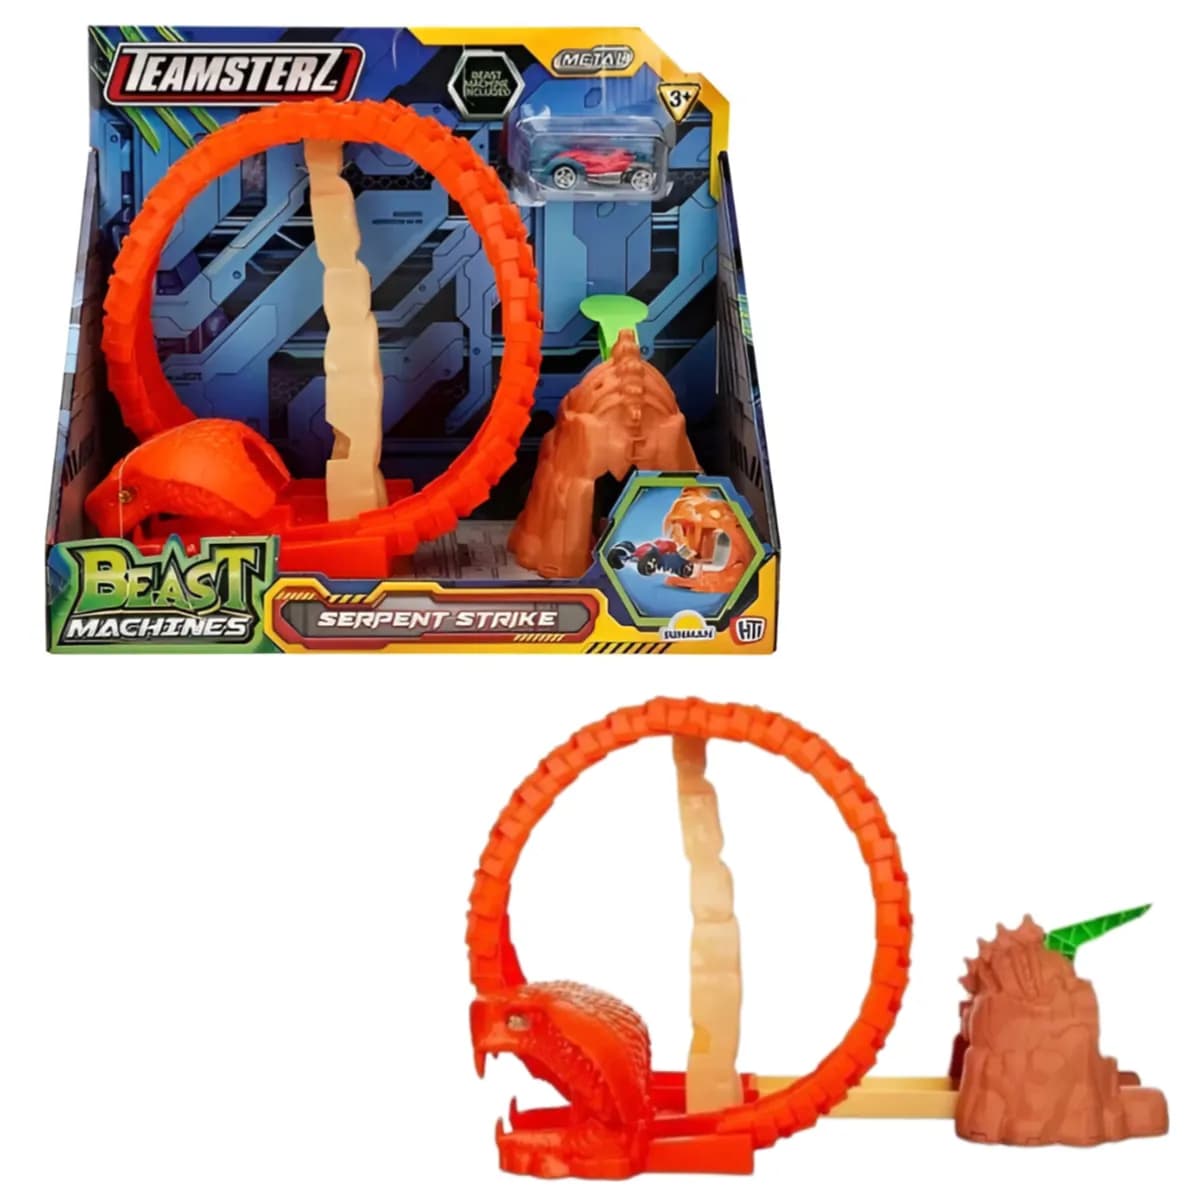 Teamsterz - Beast Machines Serpent Strike Play Set For Kids  - (PSLT47)